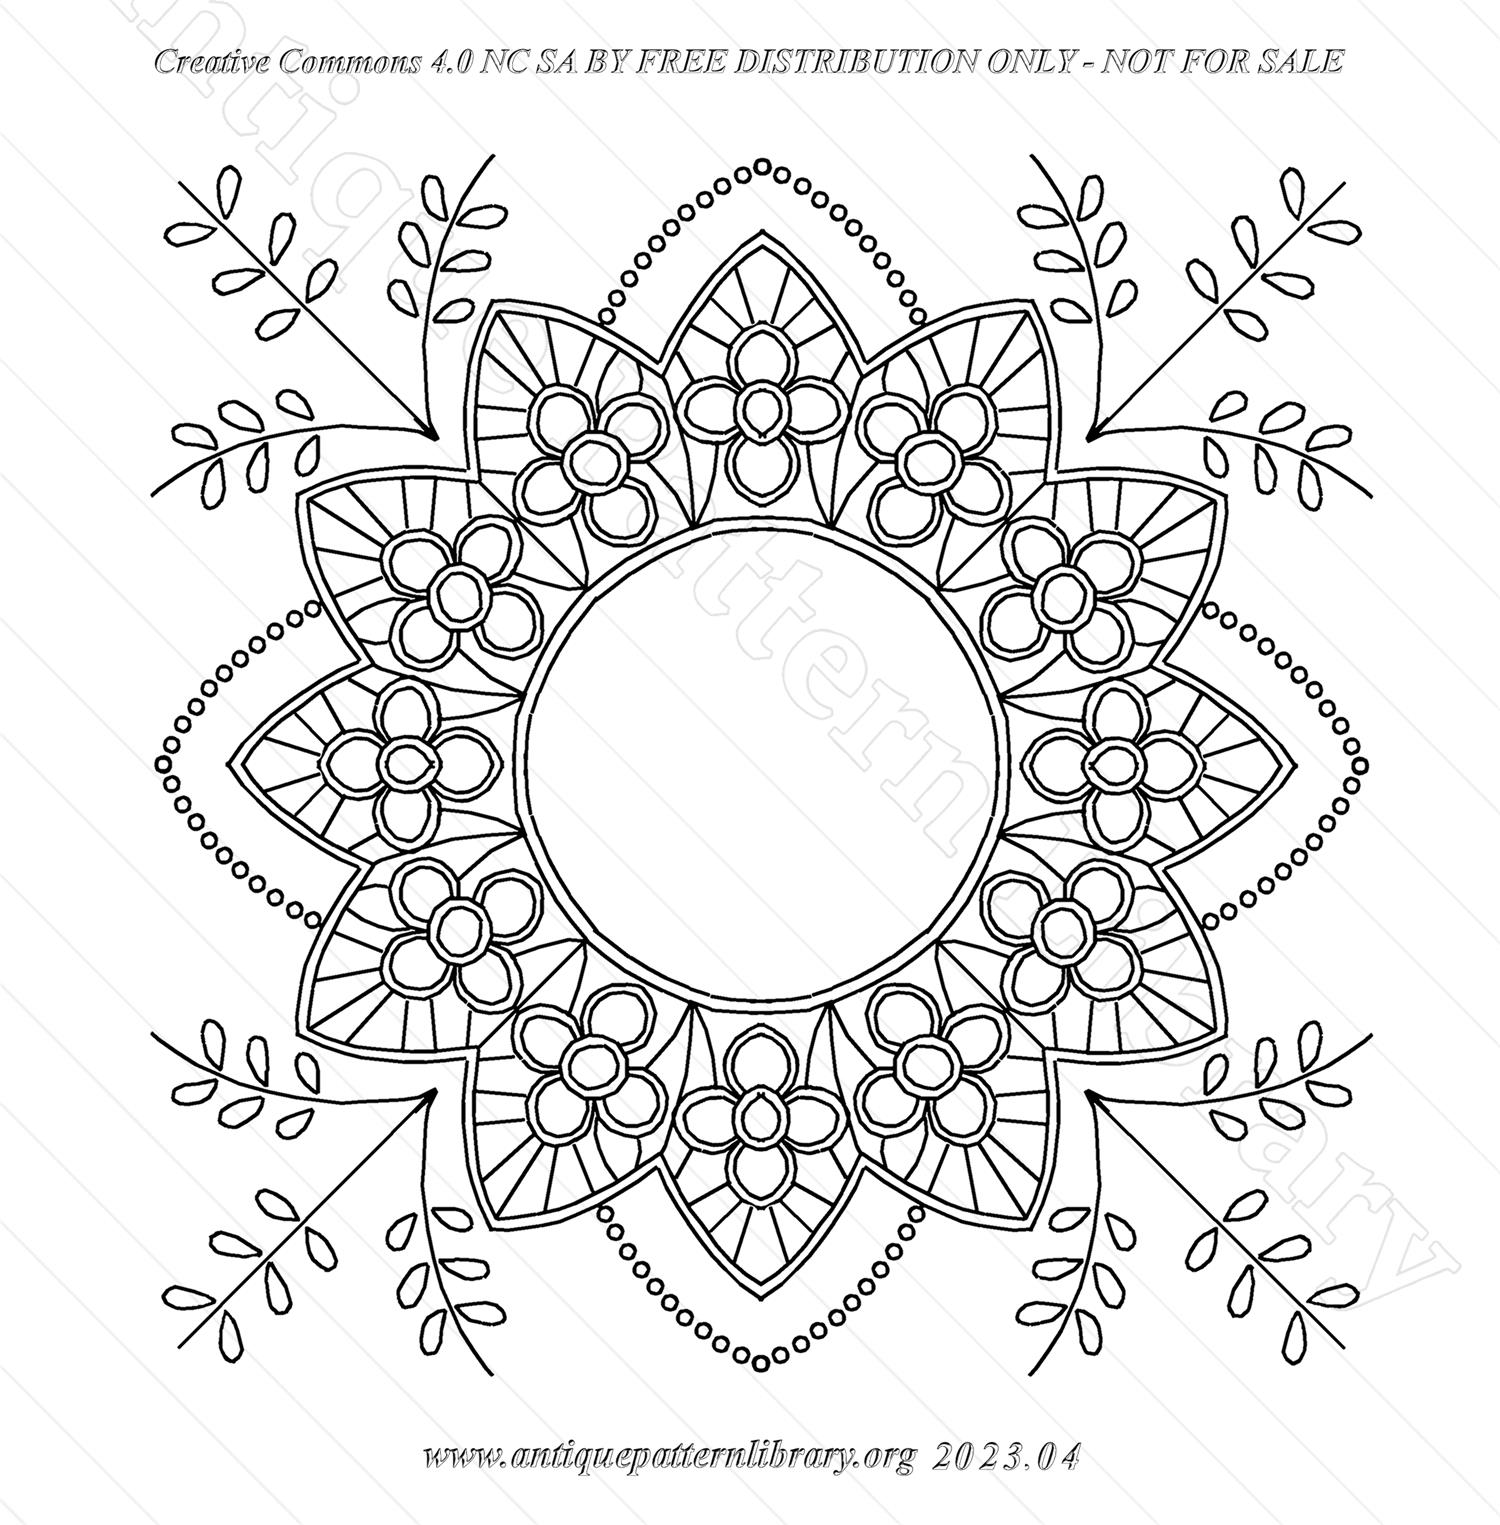 I-LZ006 Round embroidery design